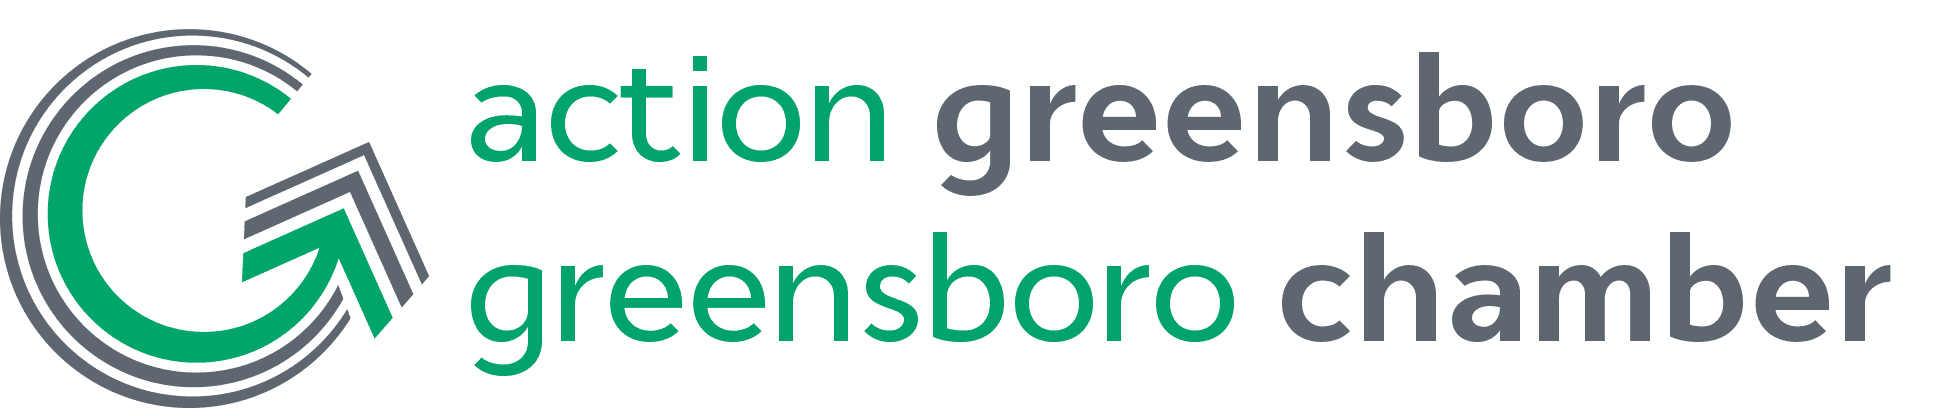 action-greensboro-logo